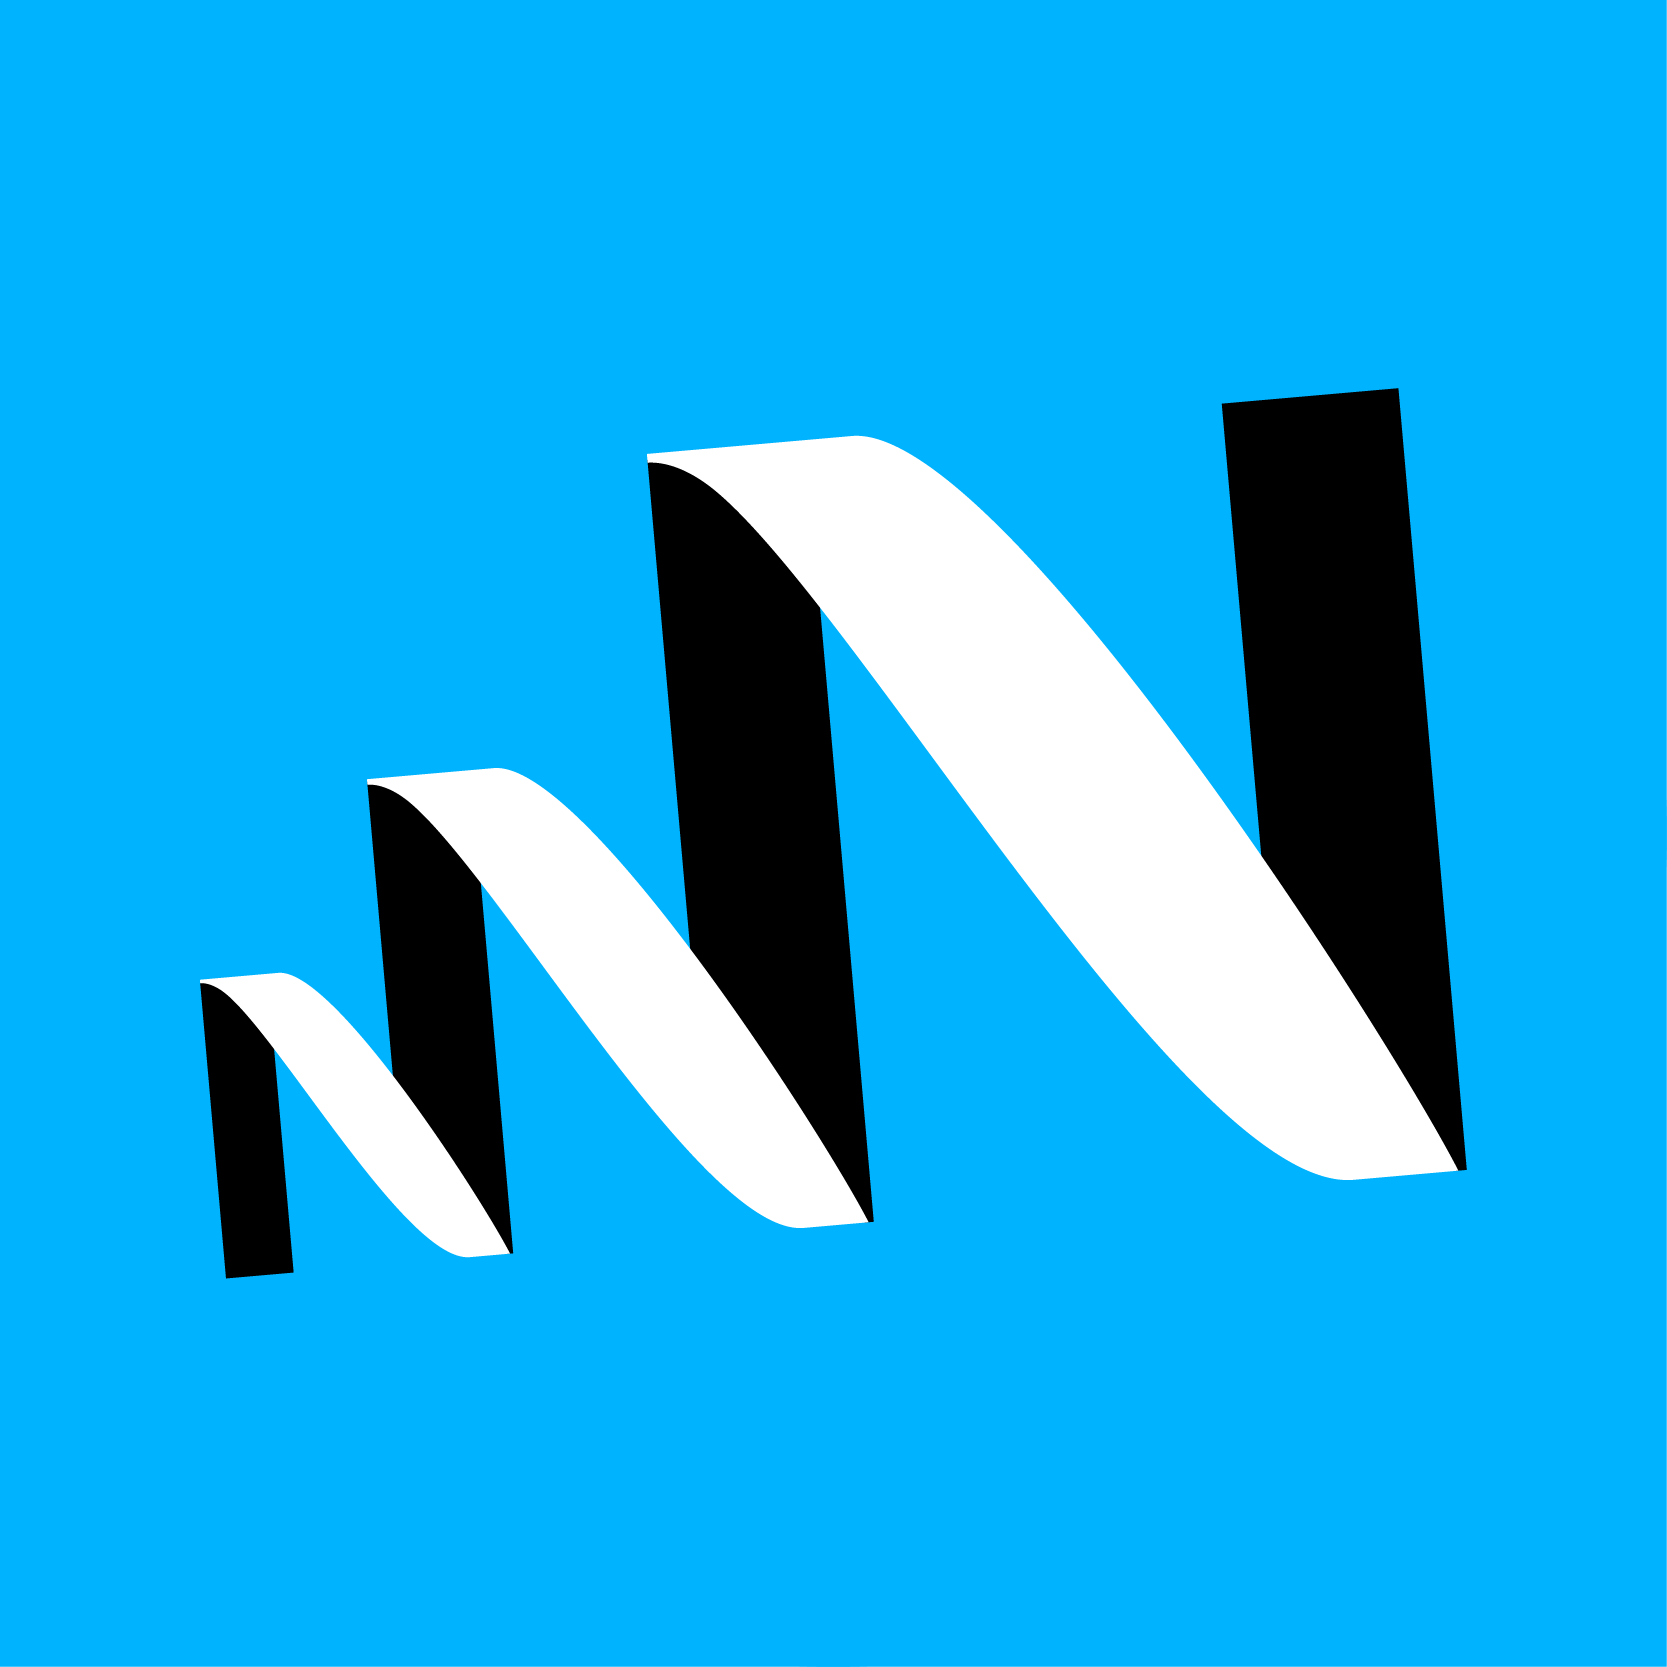 Nantes Métropole logo - a snaking line that draws three Ns, each one larger than last.